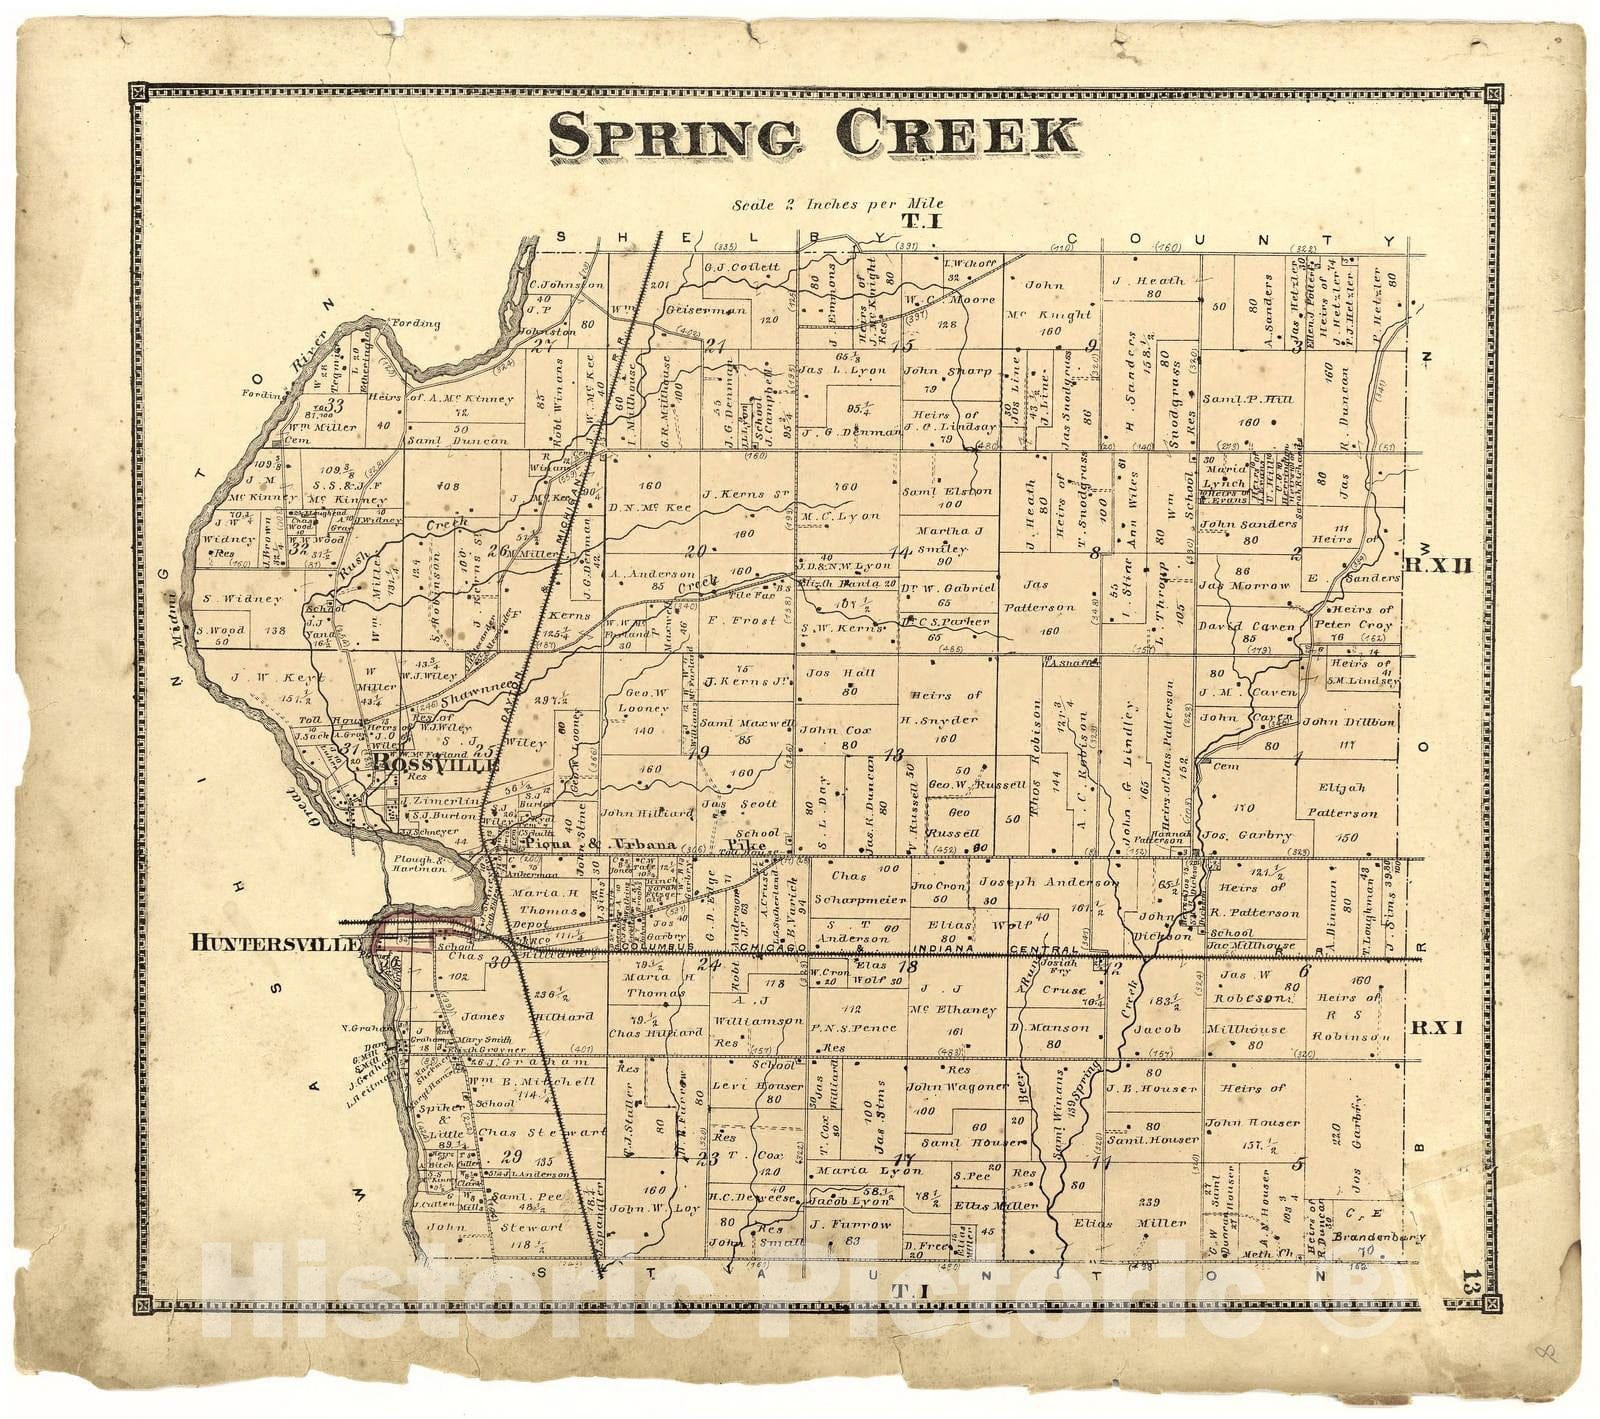 Historic 1871 Map - Atlas of Miami Co, Ohio - Spring Creek - Atlas of Miami County, Ohio